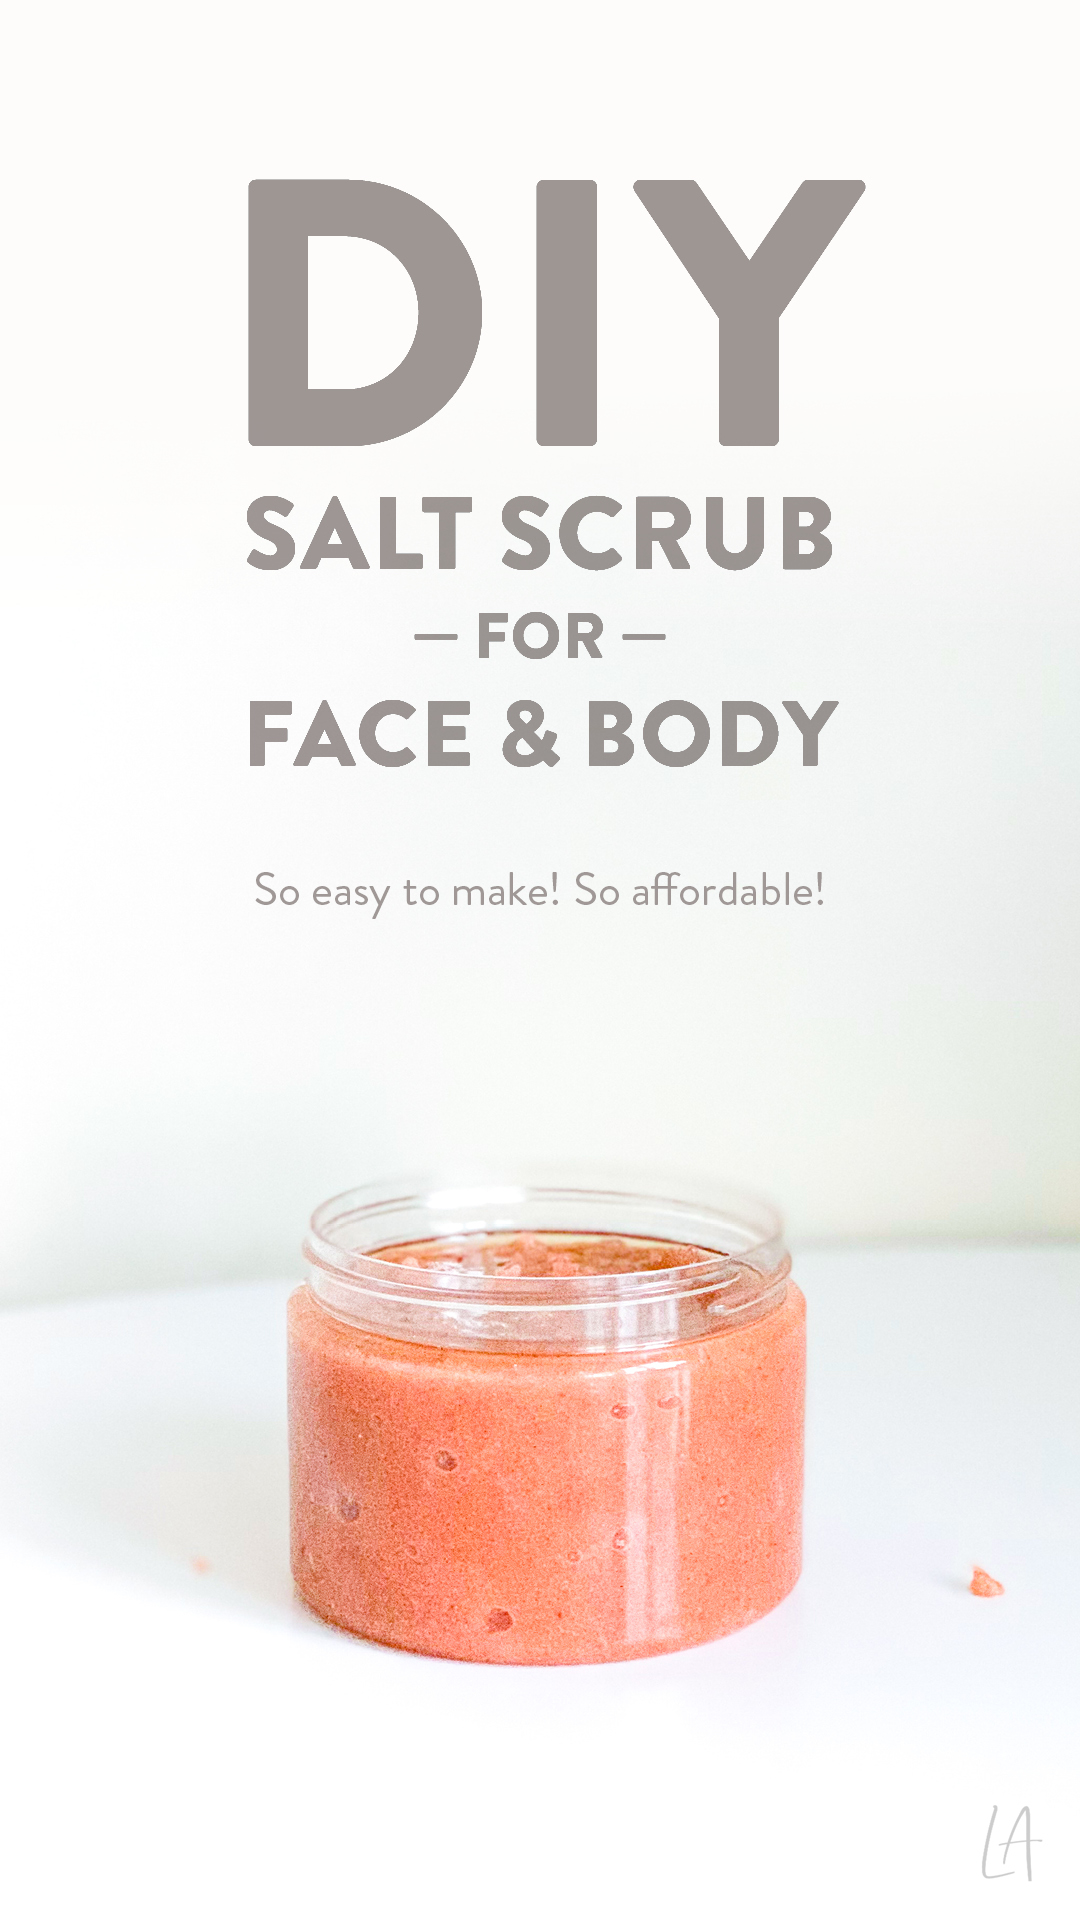 DIY Salt Scrub for face and body